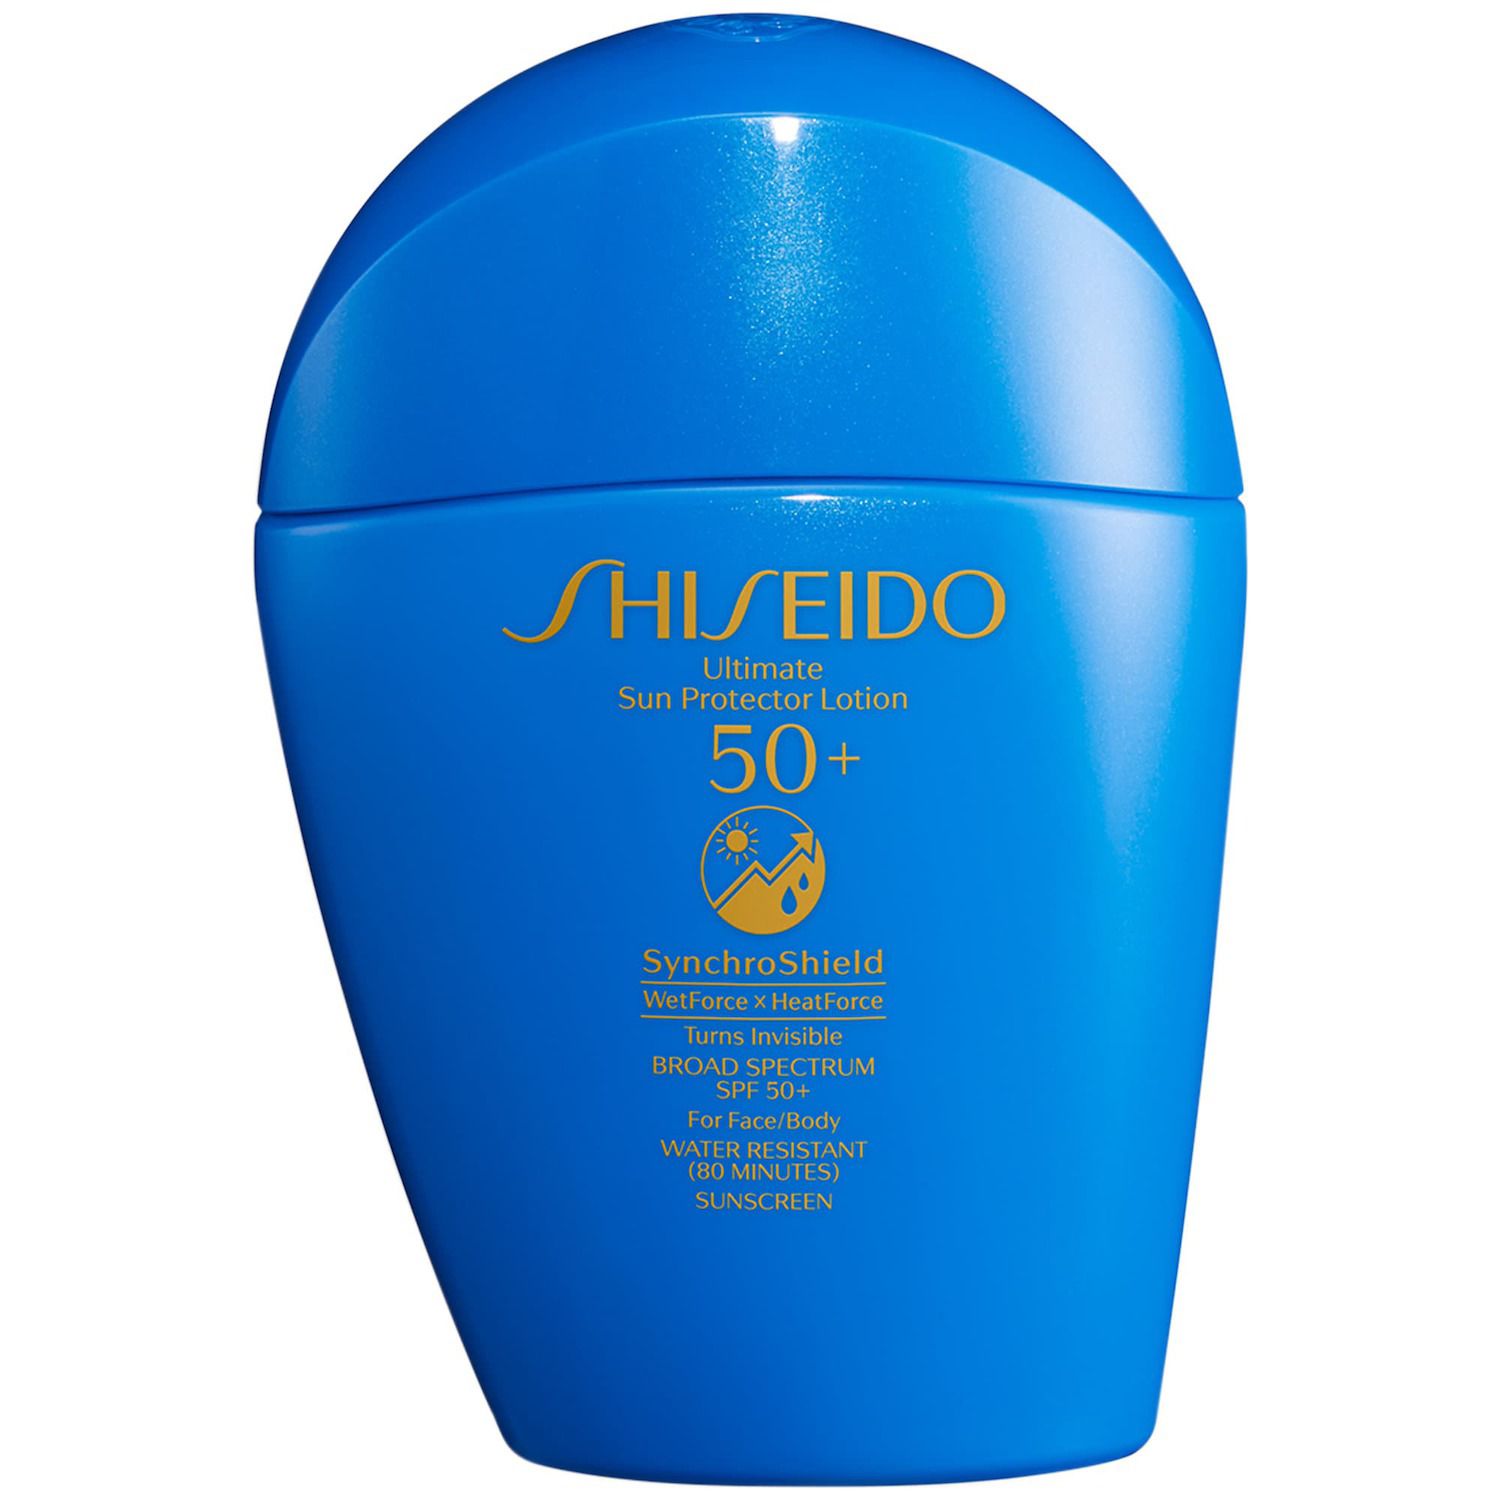 Shiseido Ultimate Sun Protector Lotion SPF 50+ Sunscreen - None (2 FL OZ)